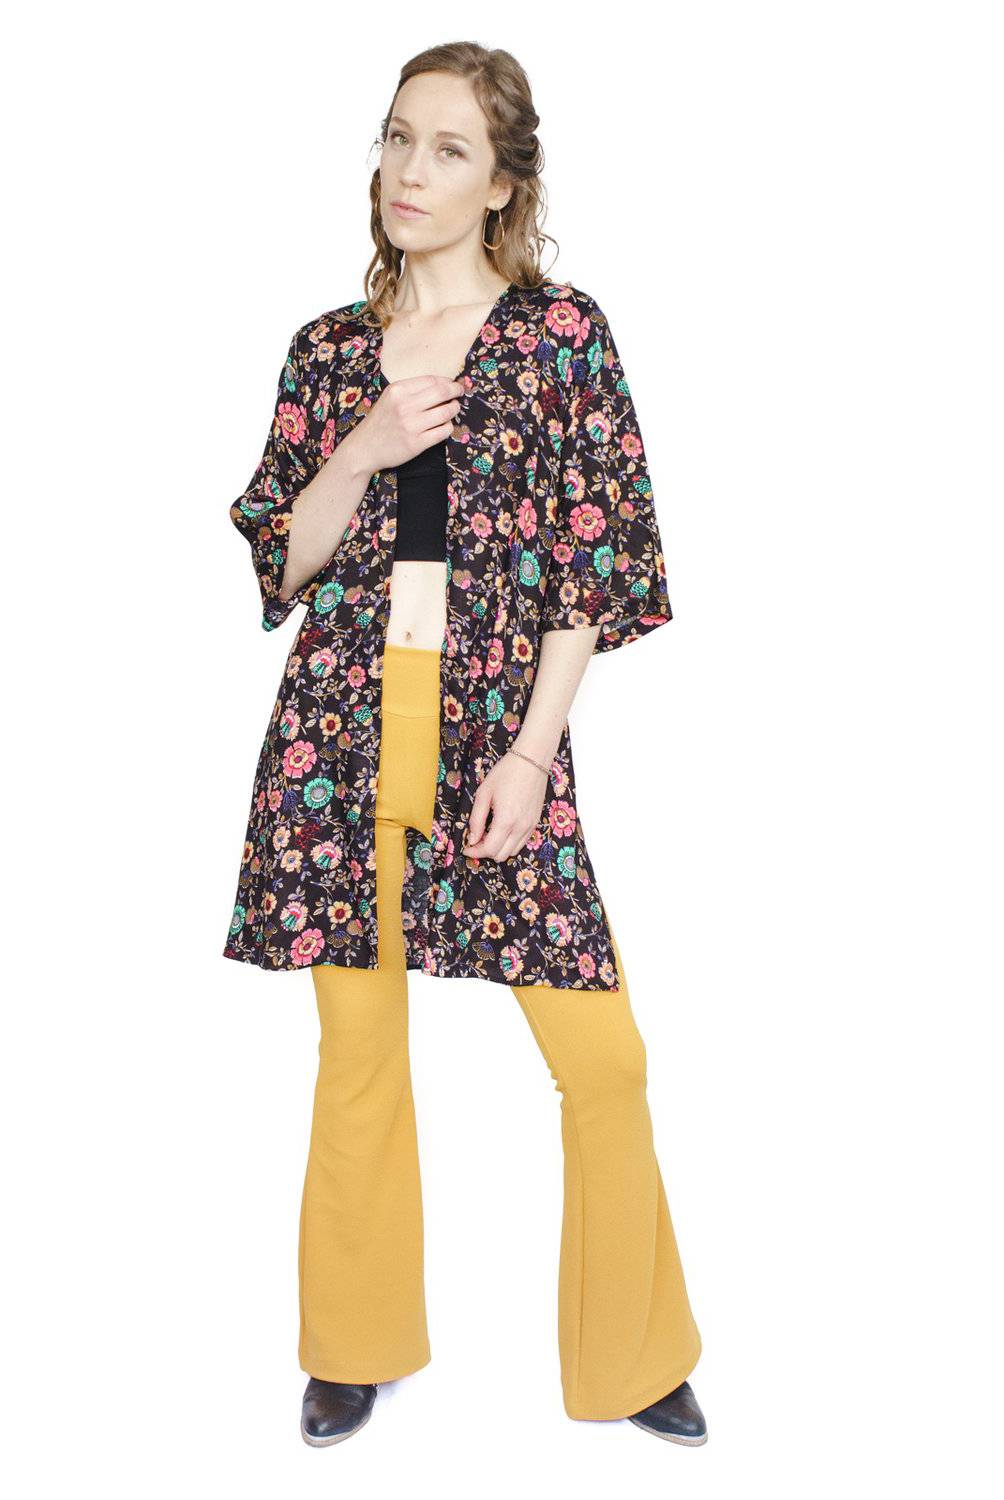 NATALIA SEGUEL - Kimono